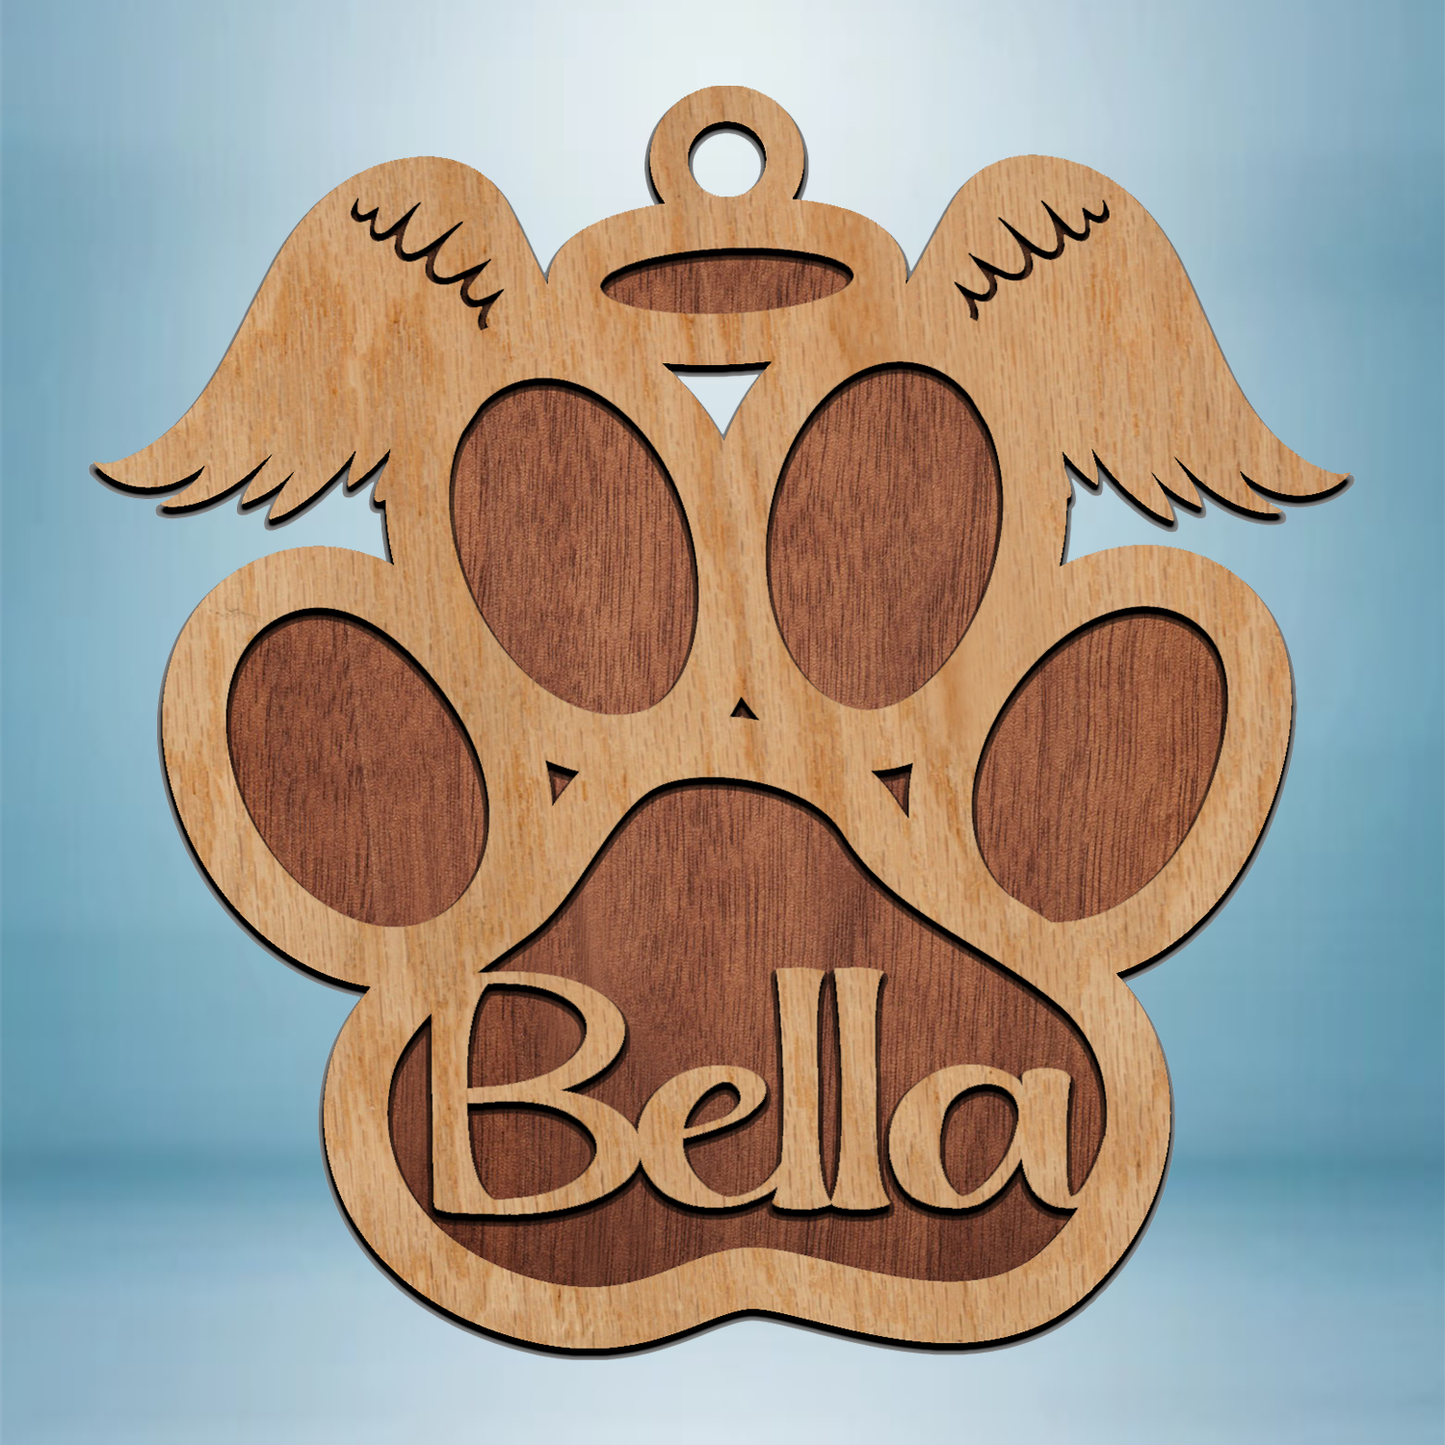 Laser cut memorial pet paw print ornament with wings and custom name